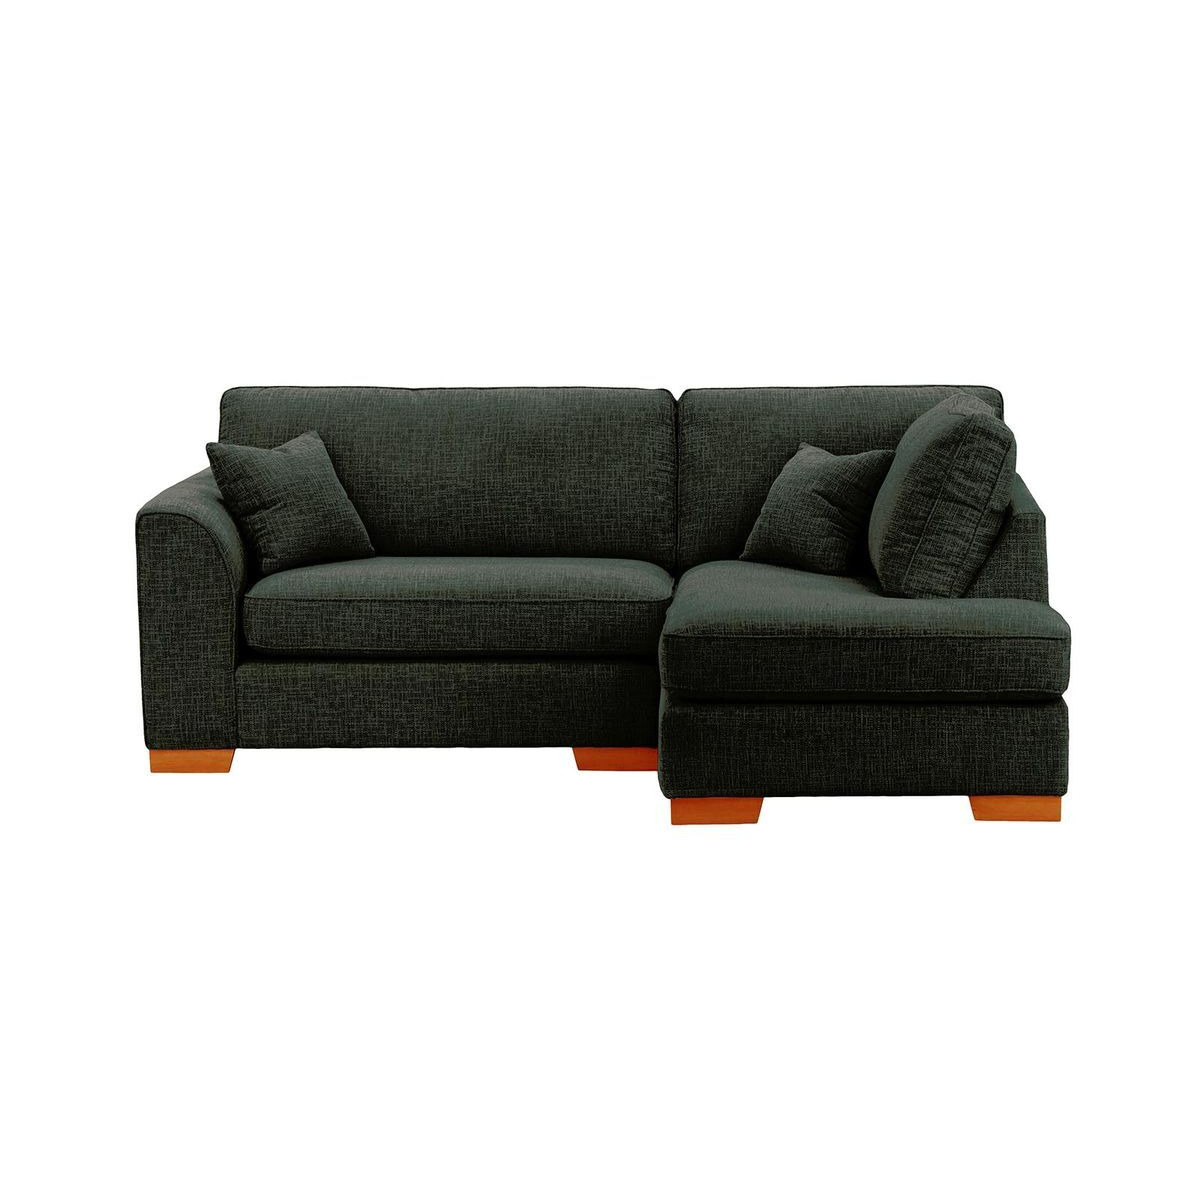 Avos Right Hand Corner Sofa, charcoal, Leg colour: aveo - image 1